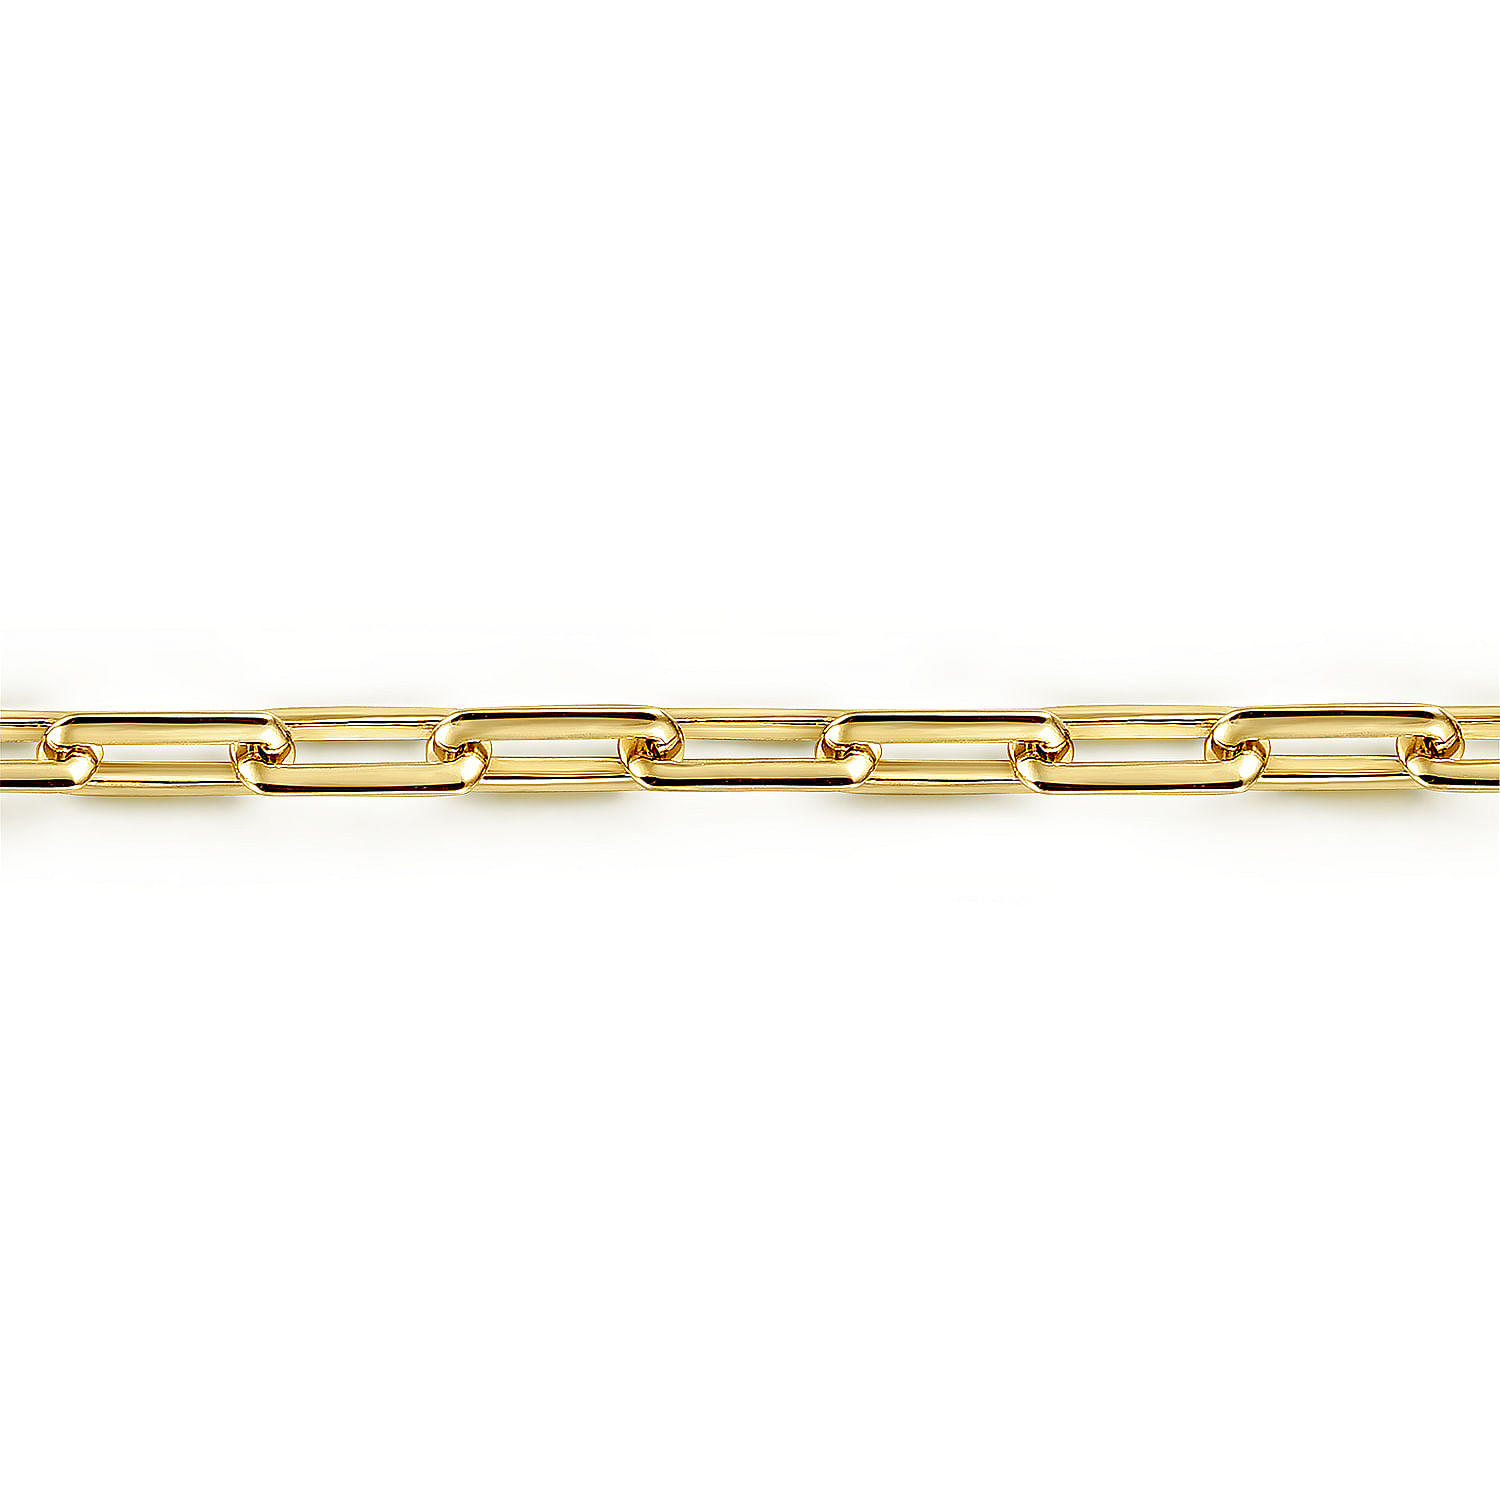 14K Yellow Gold Elongated Chain Bracelet